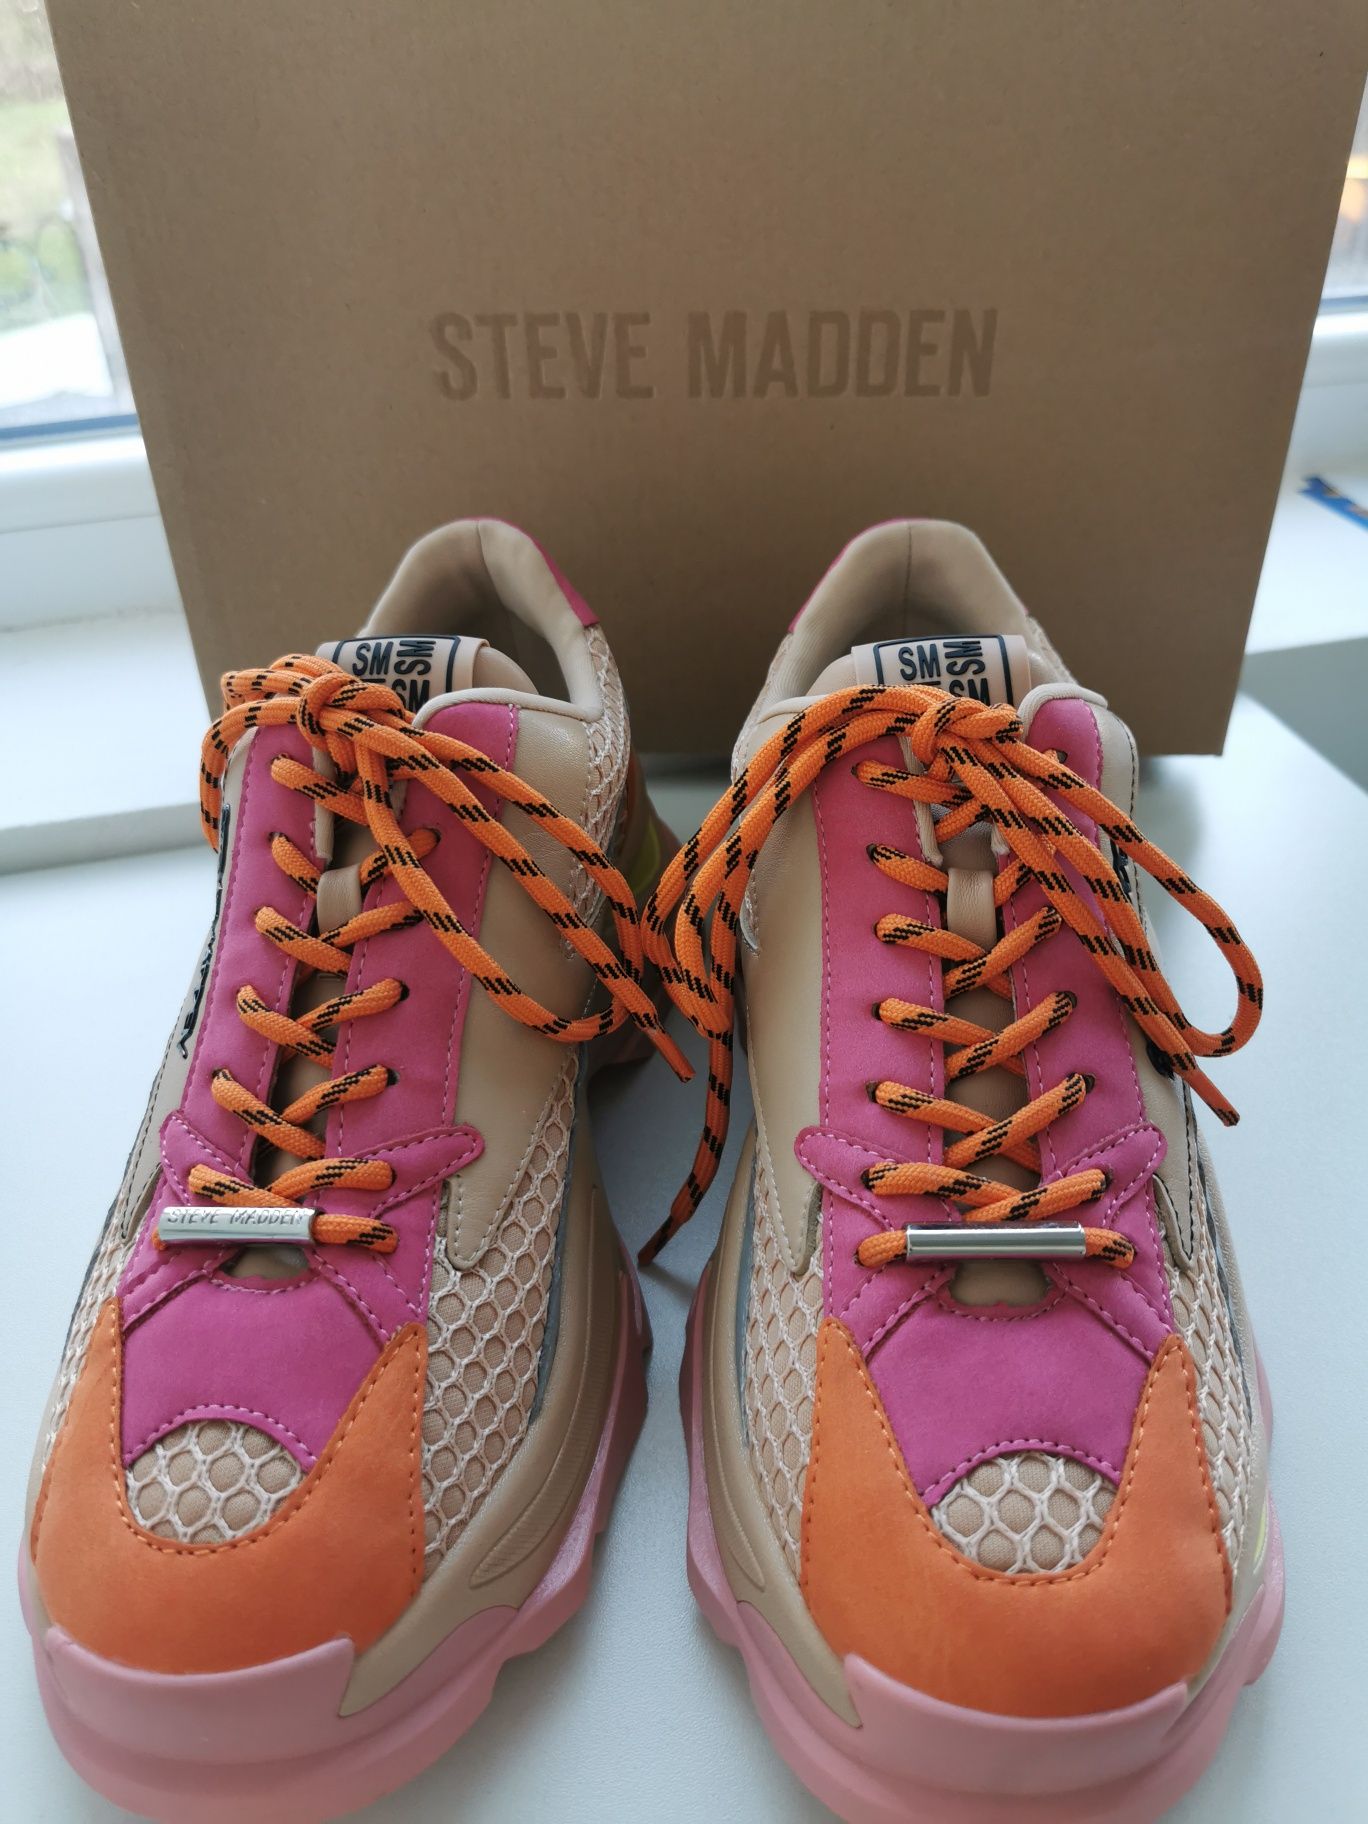 Adidas Steve Madden